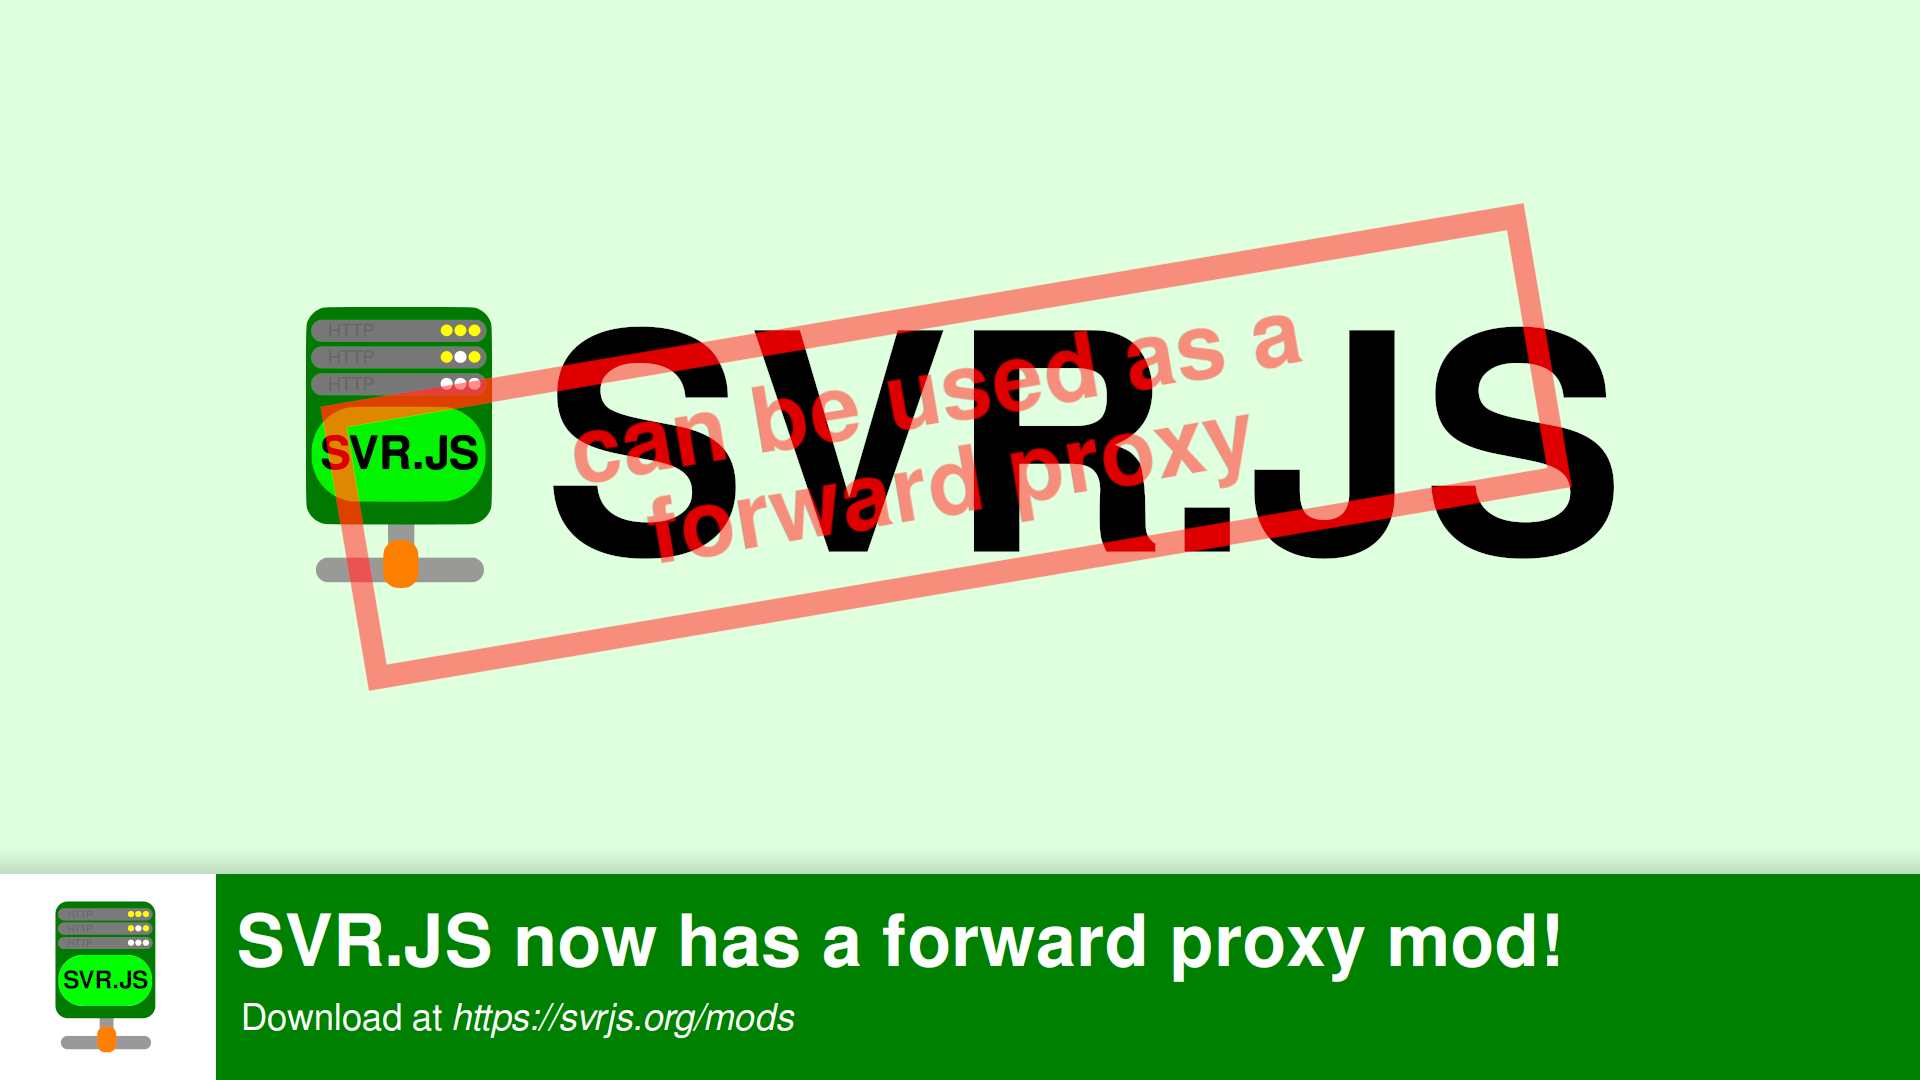 SVR.JS now has a forward proxy mod!